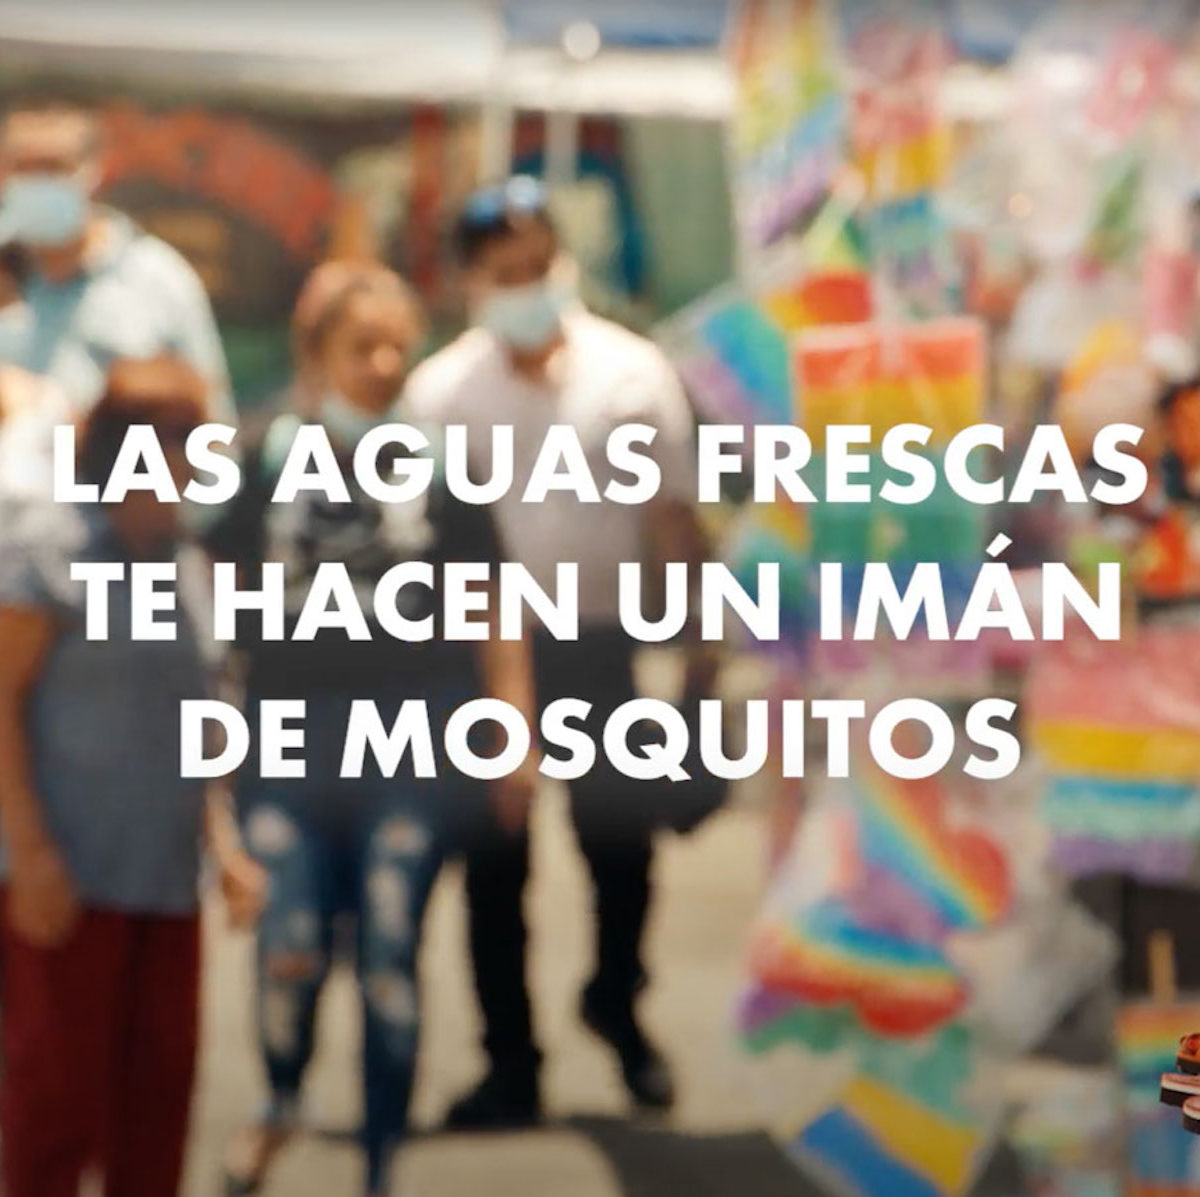 Text: Las aguas frescas te hacen iman de mosquitos over background image of people shopping for pinatas.